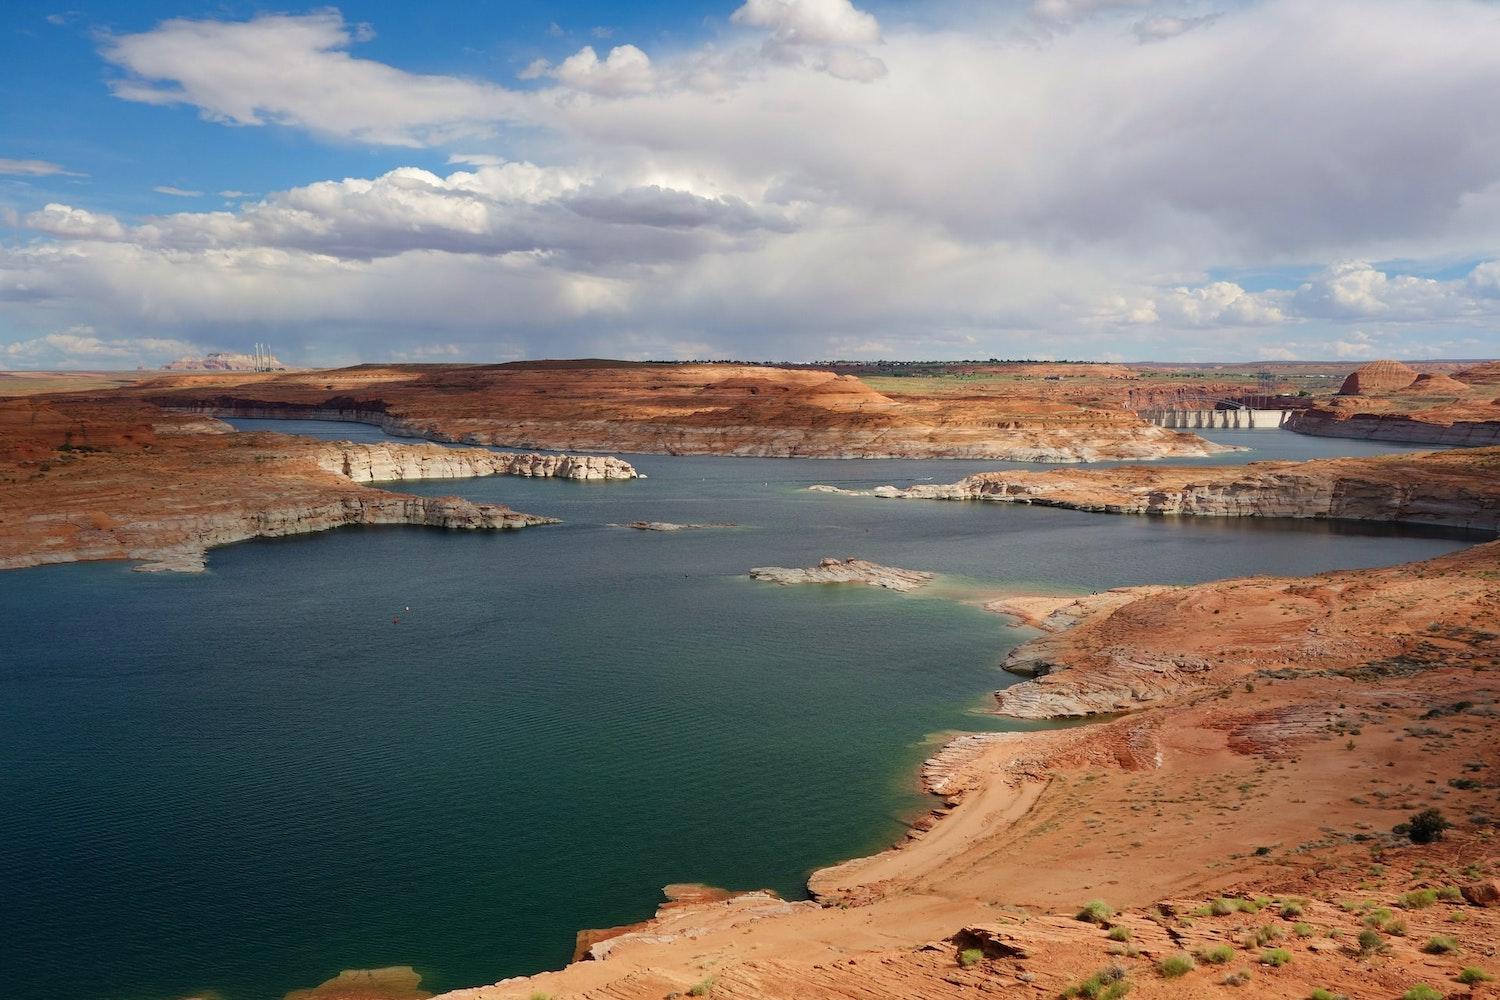 Colorado River running low - California drought